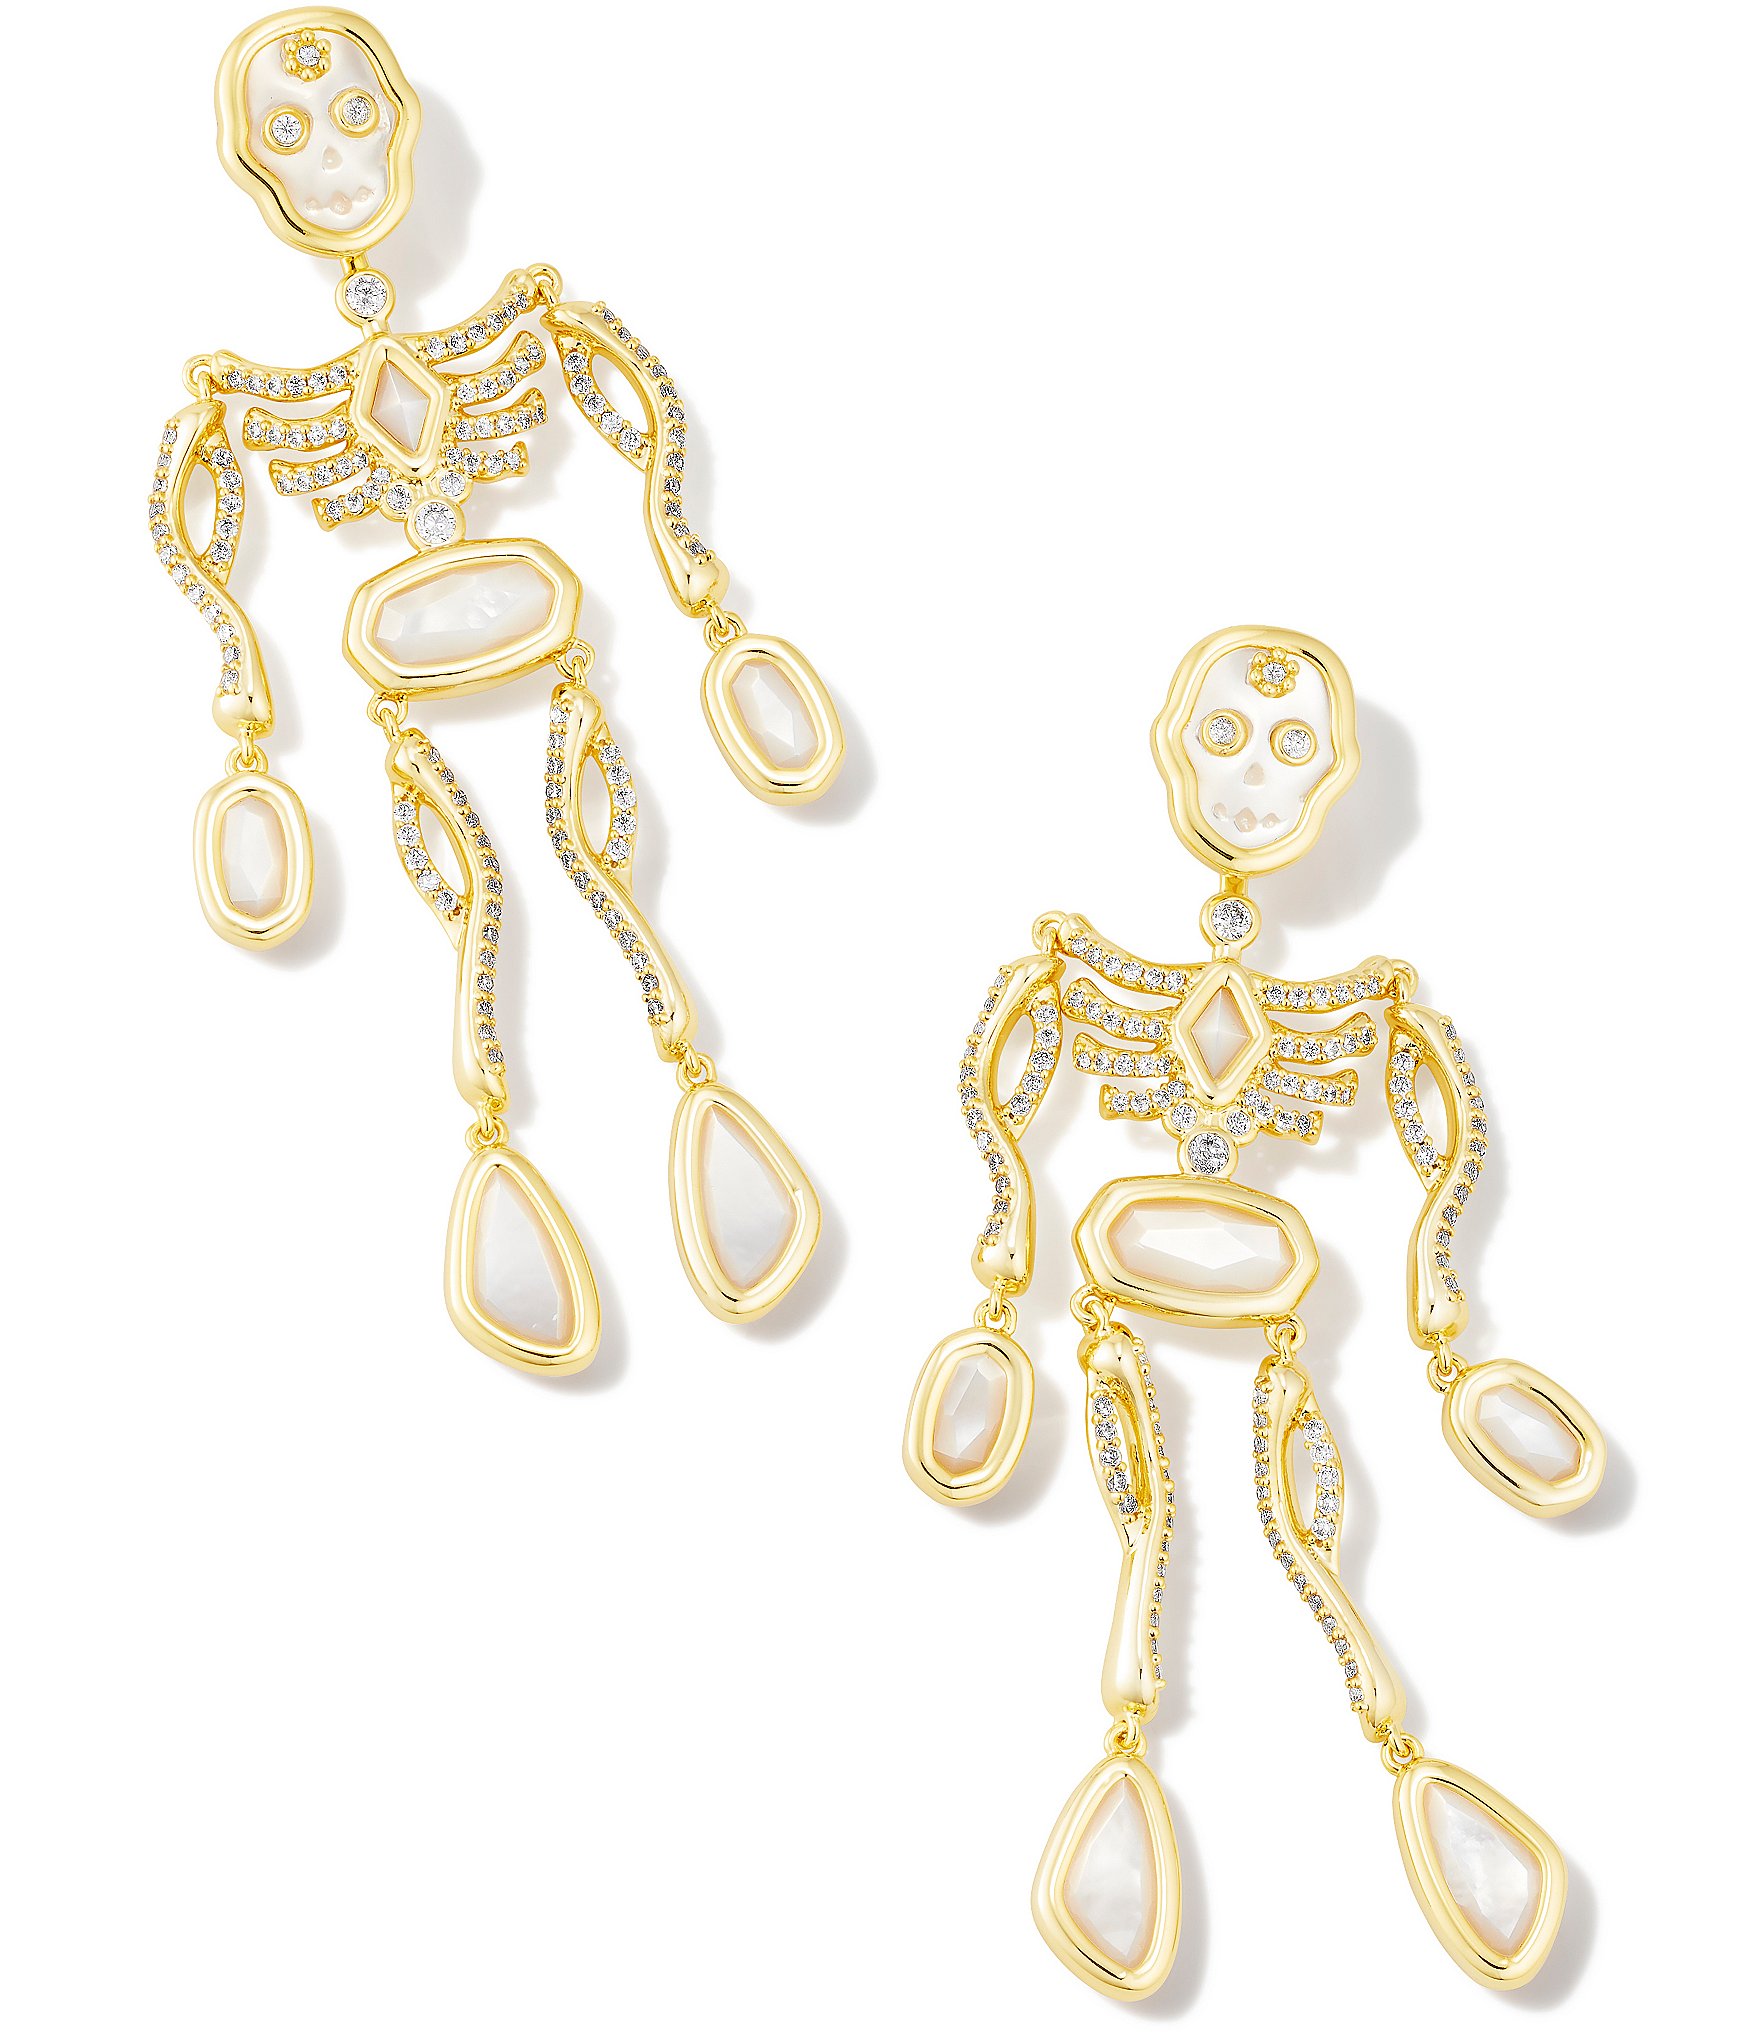 VON MAUR pearl crystal gold tone chain necklace $98.00 retail